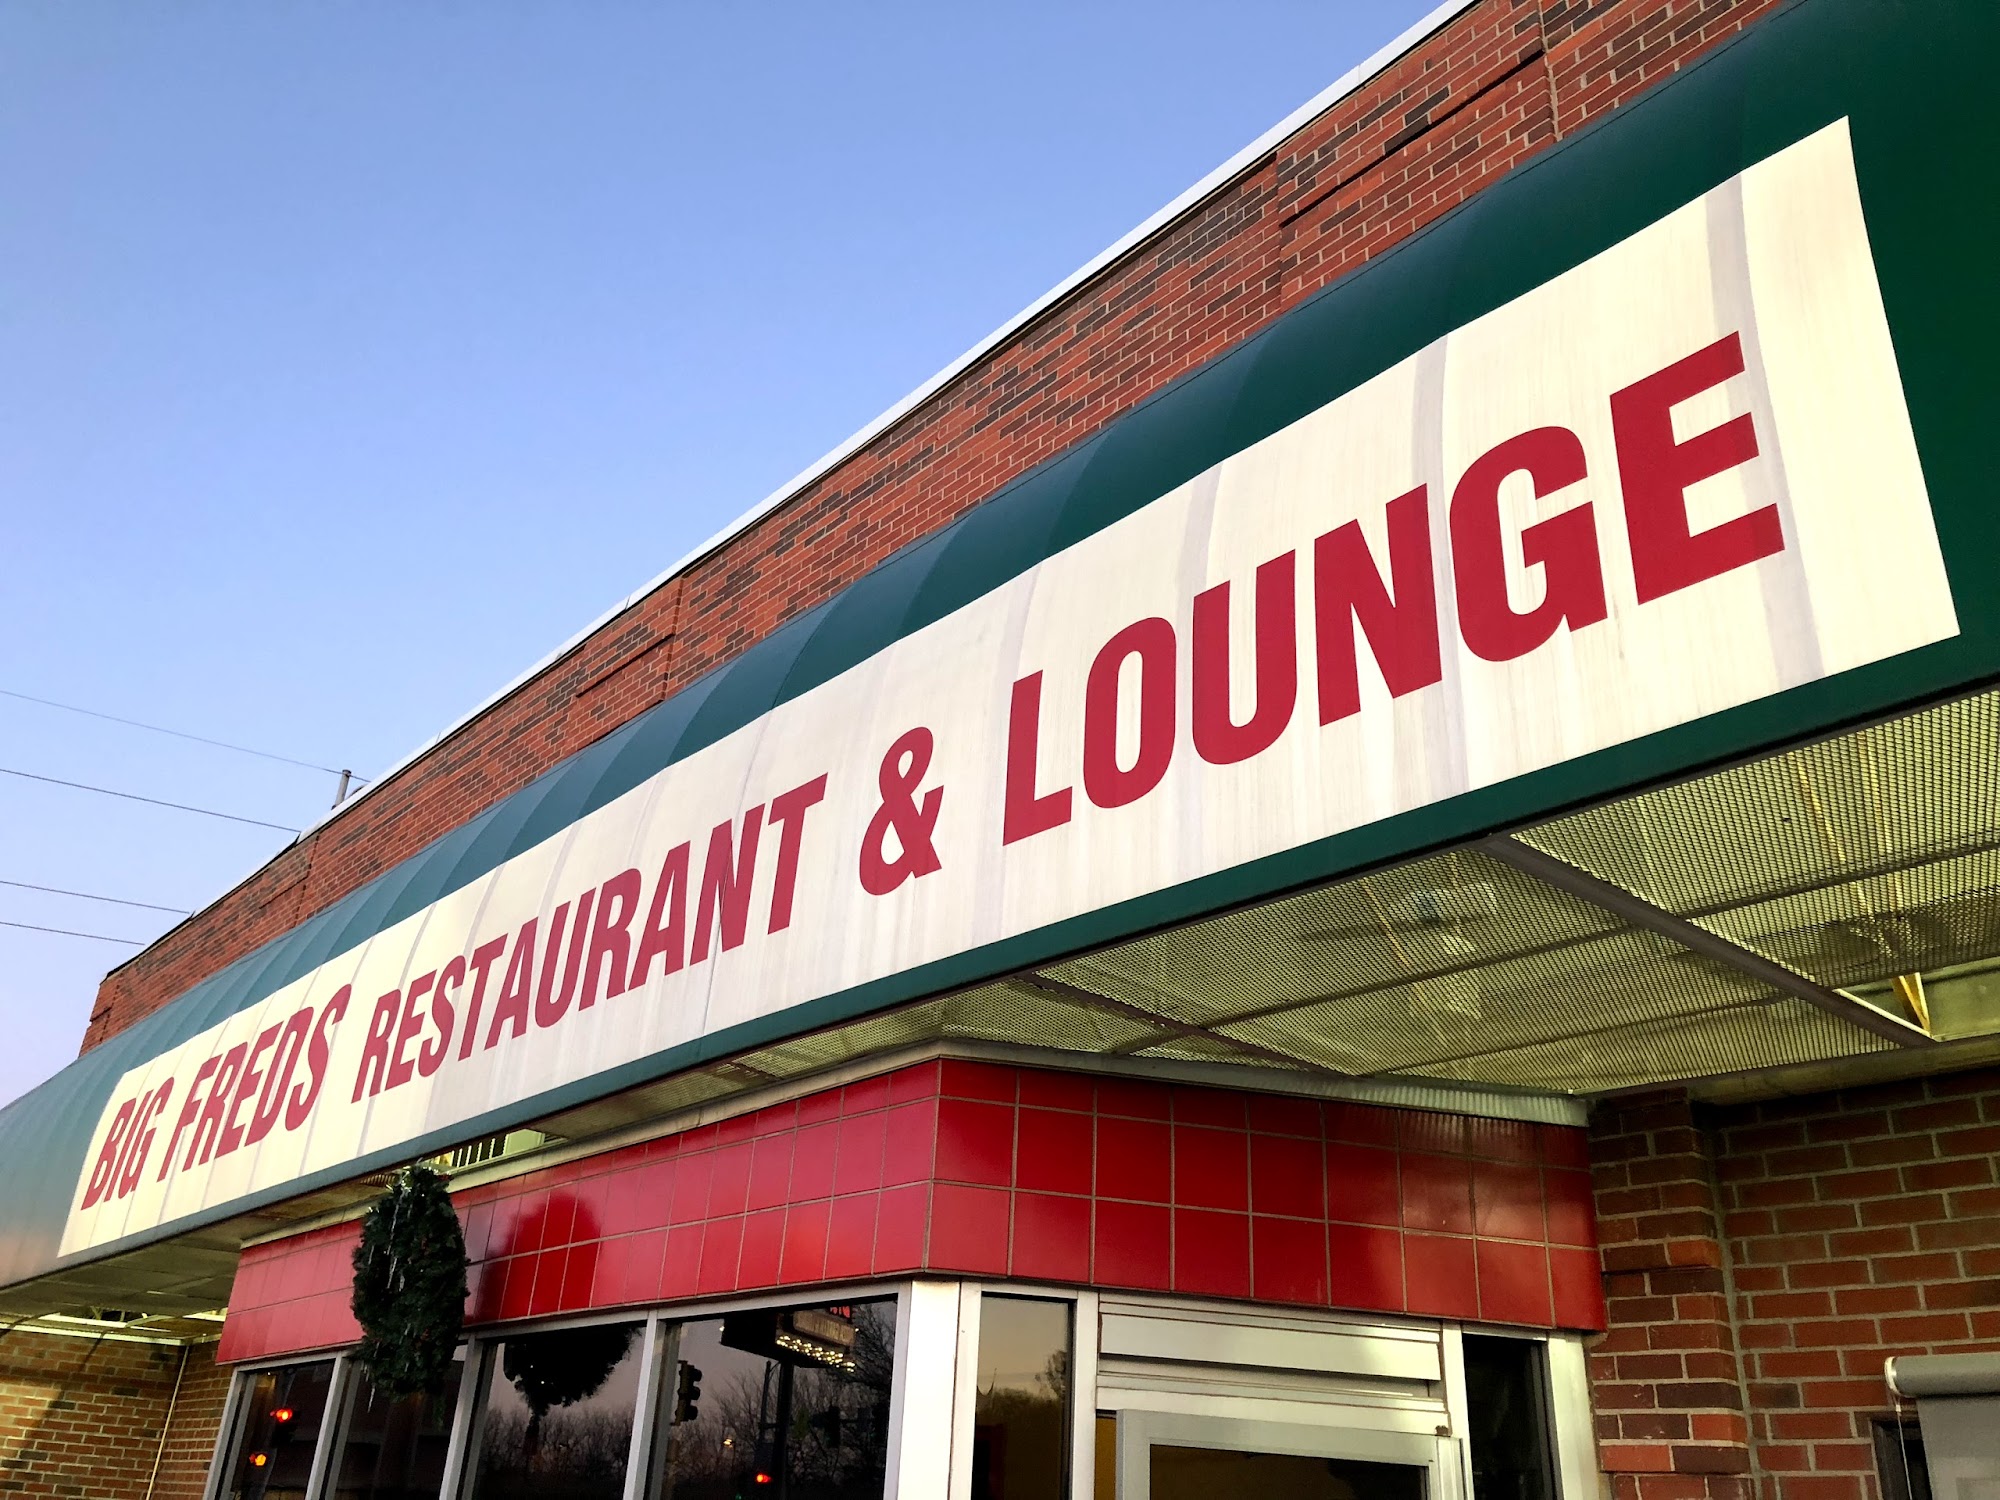 Big Fred's Pizza Garden & Lounge 1101 S 119th St, Omaha, NE 68144